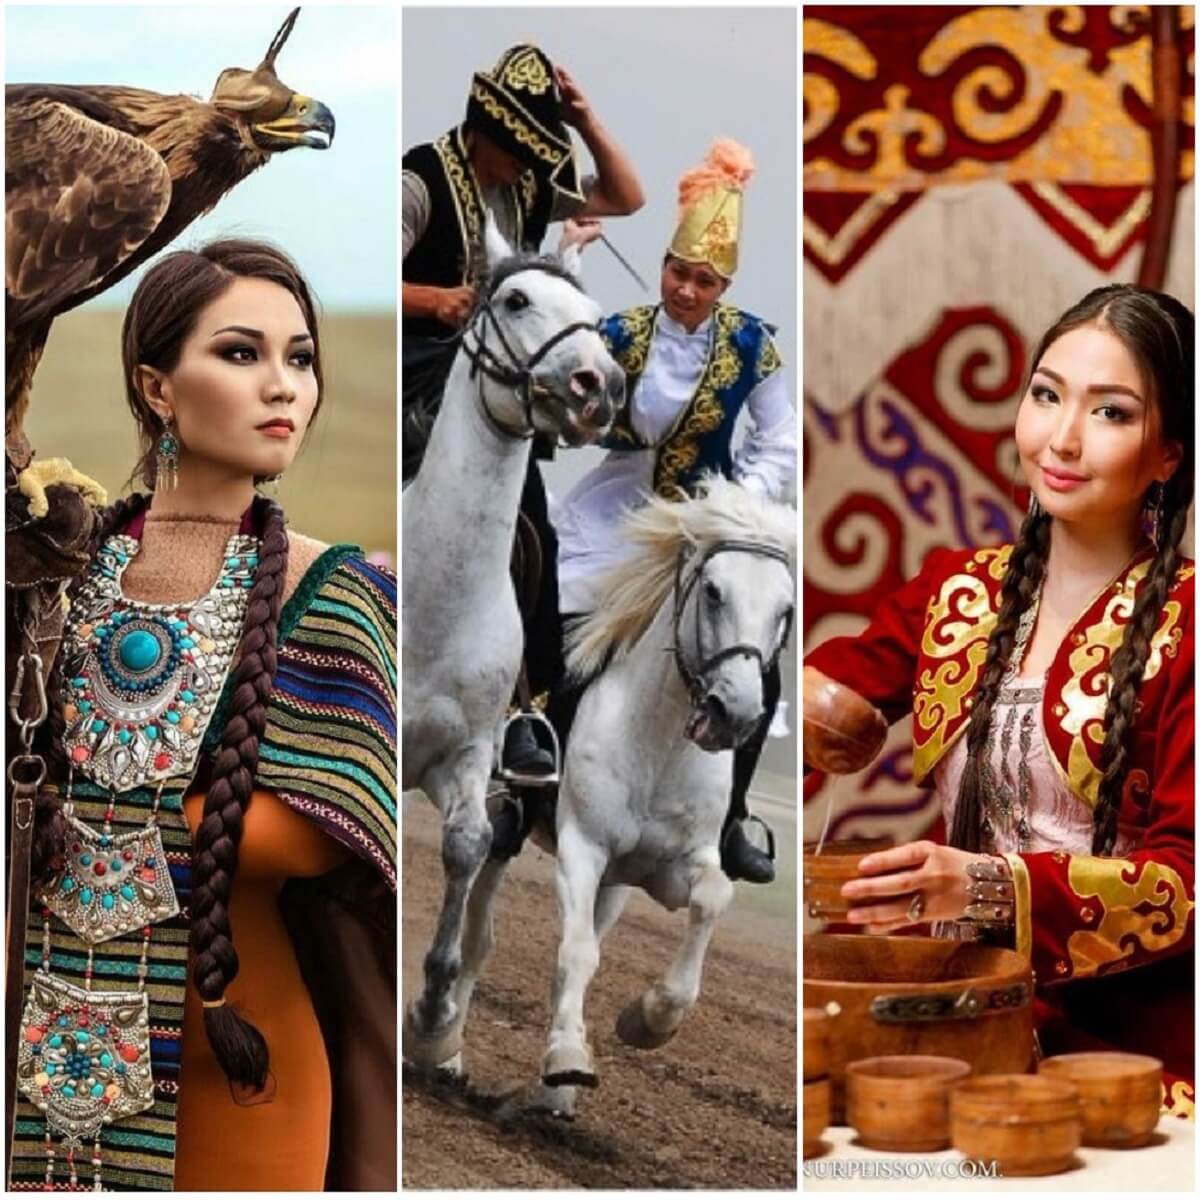 Kazakh culture